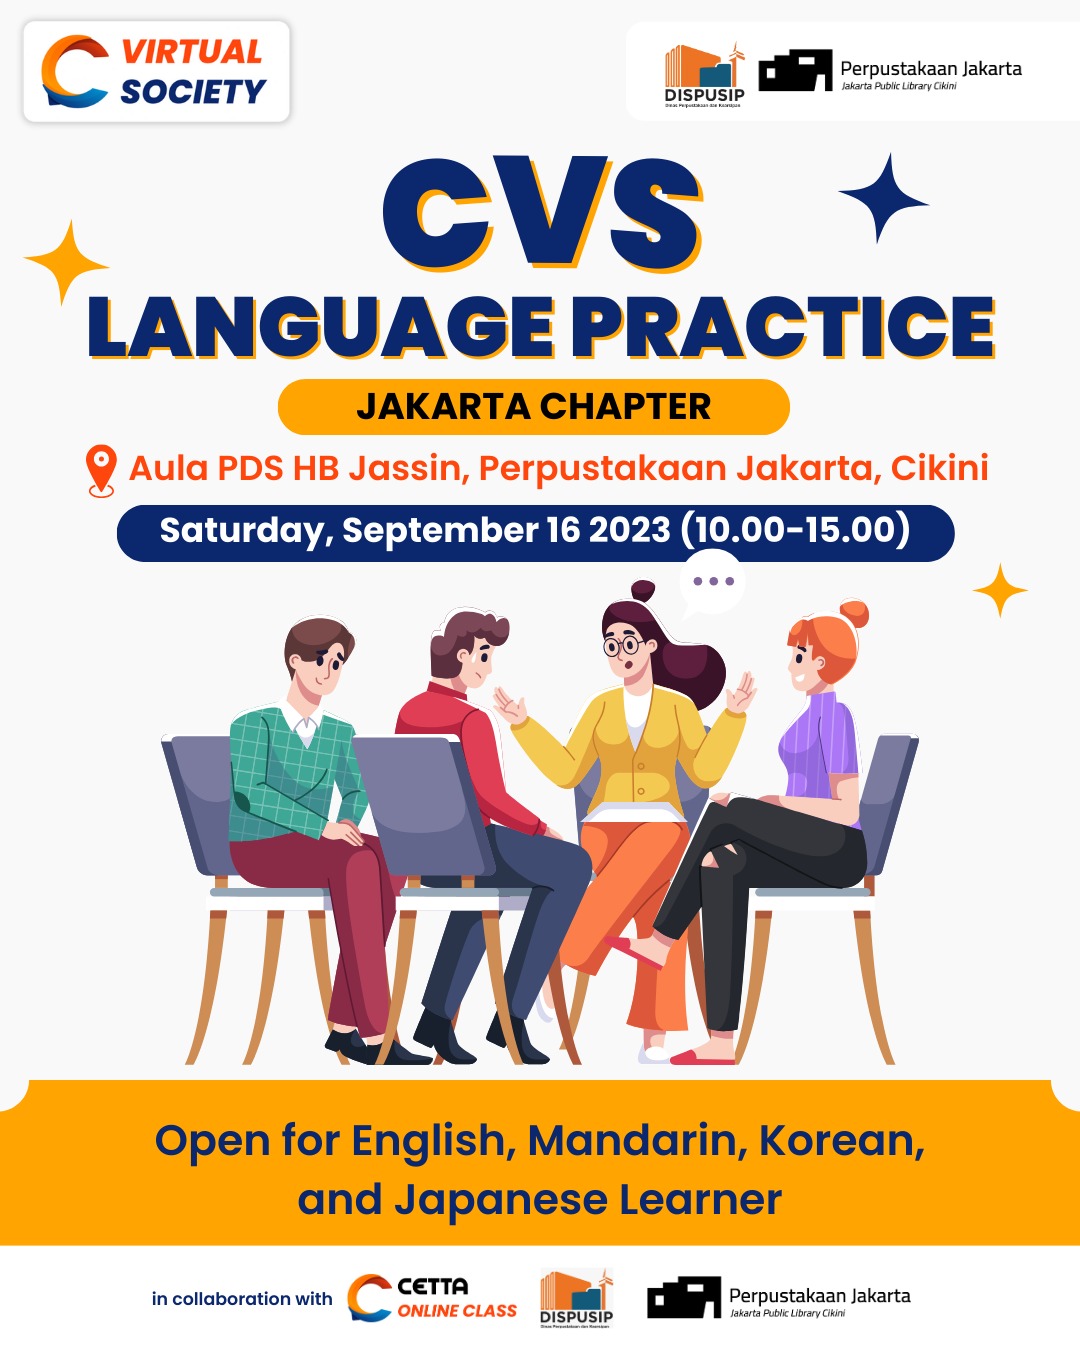 CVS Language Practice Event